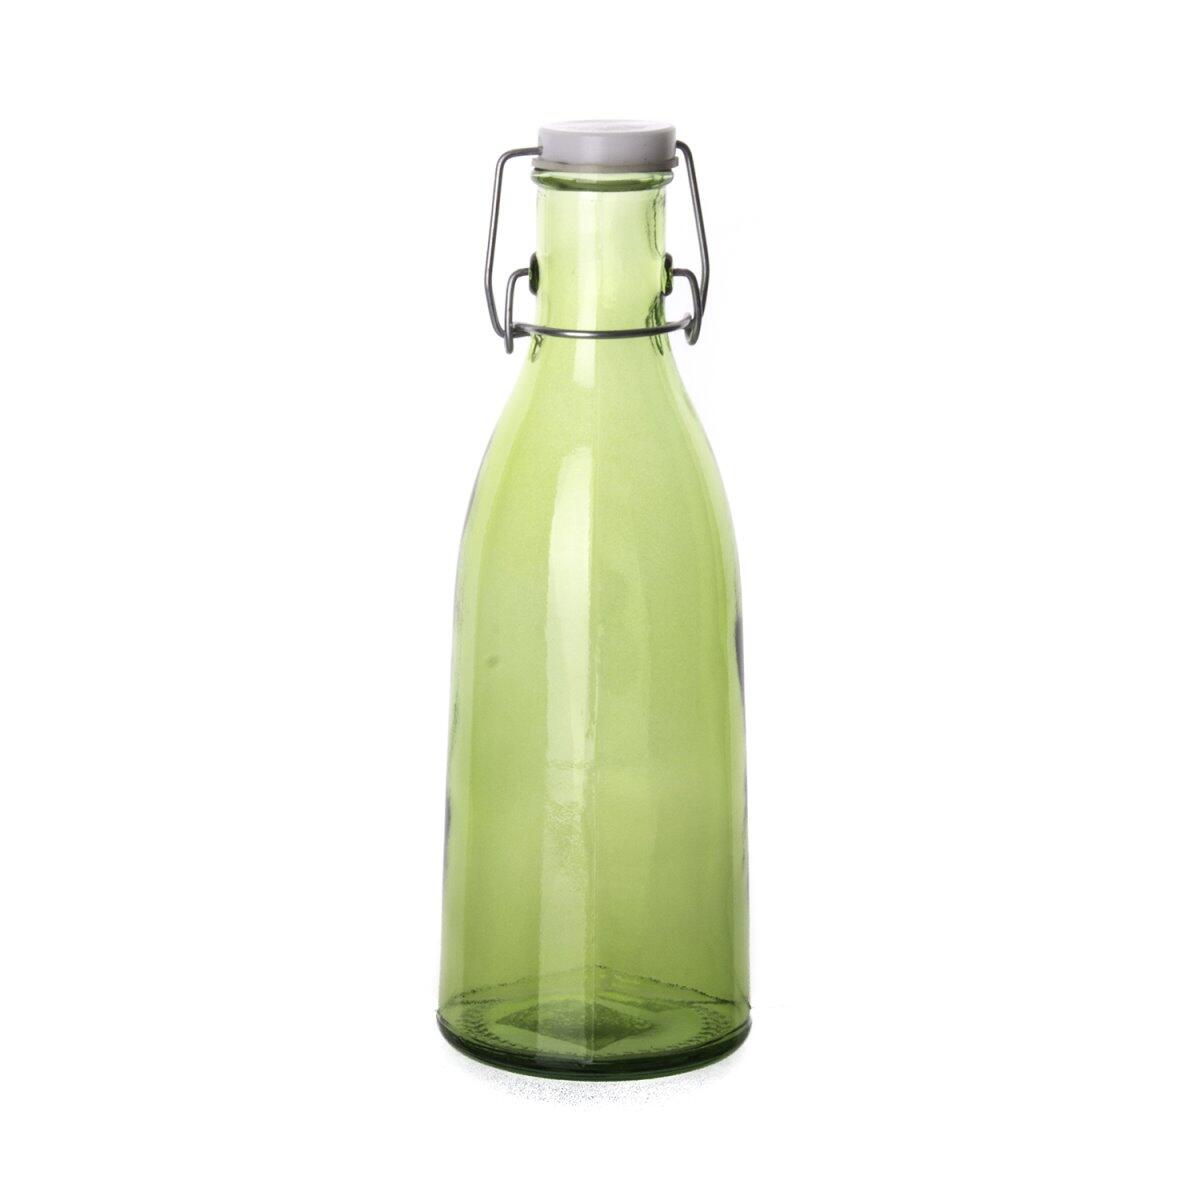 Sanmiguel Bottle 1 Liter